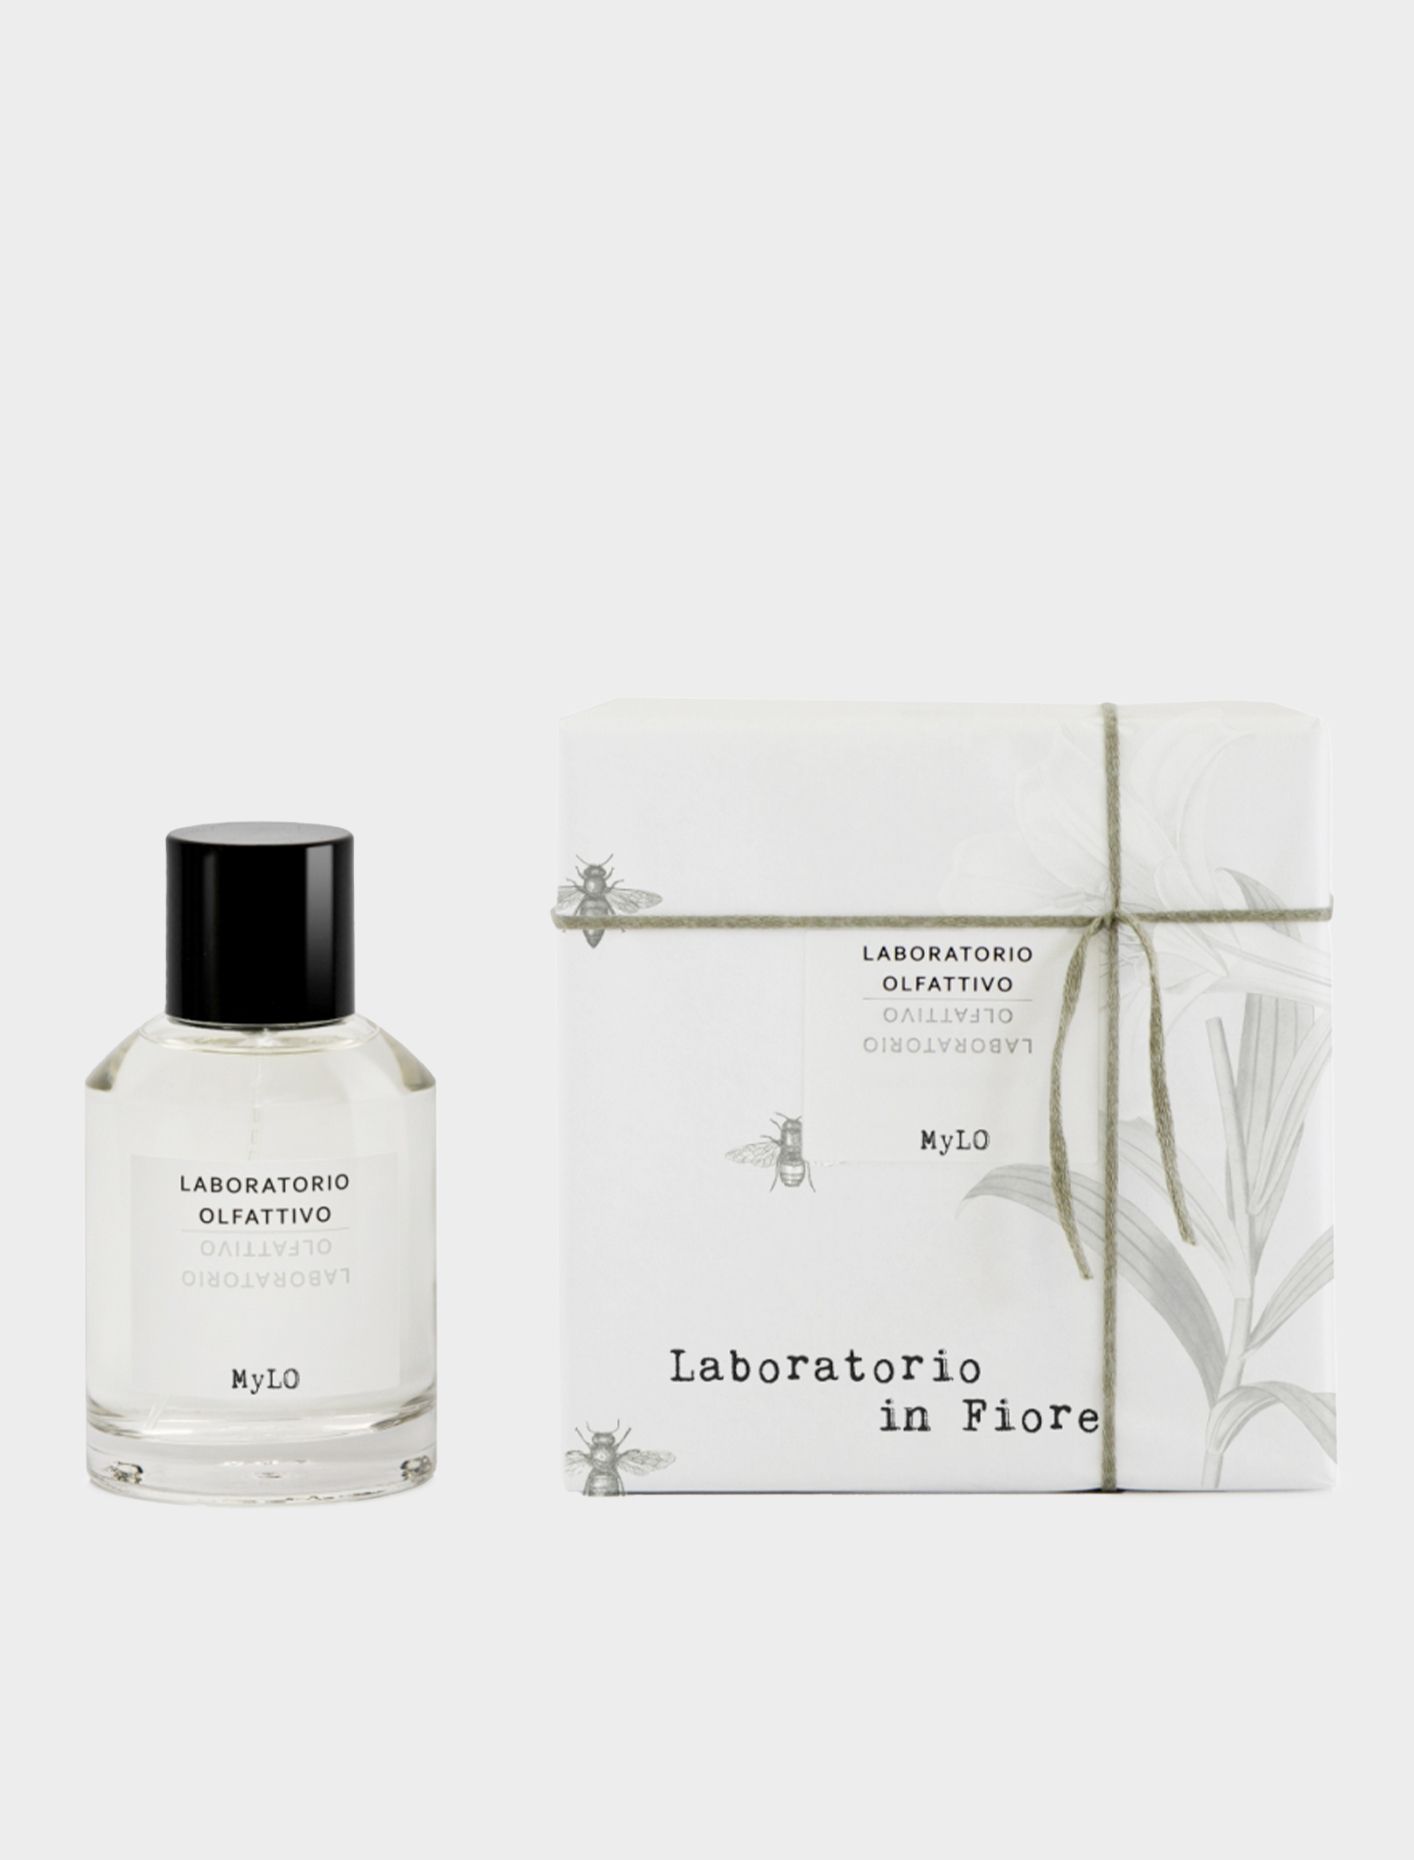 Laboratorio Olfattivo MyLO 100 ml Eau de Parfum | Voo Store Berlin